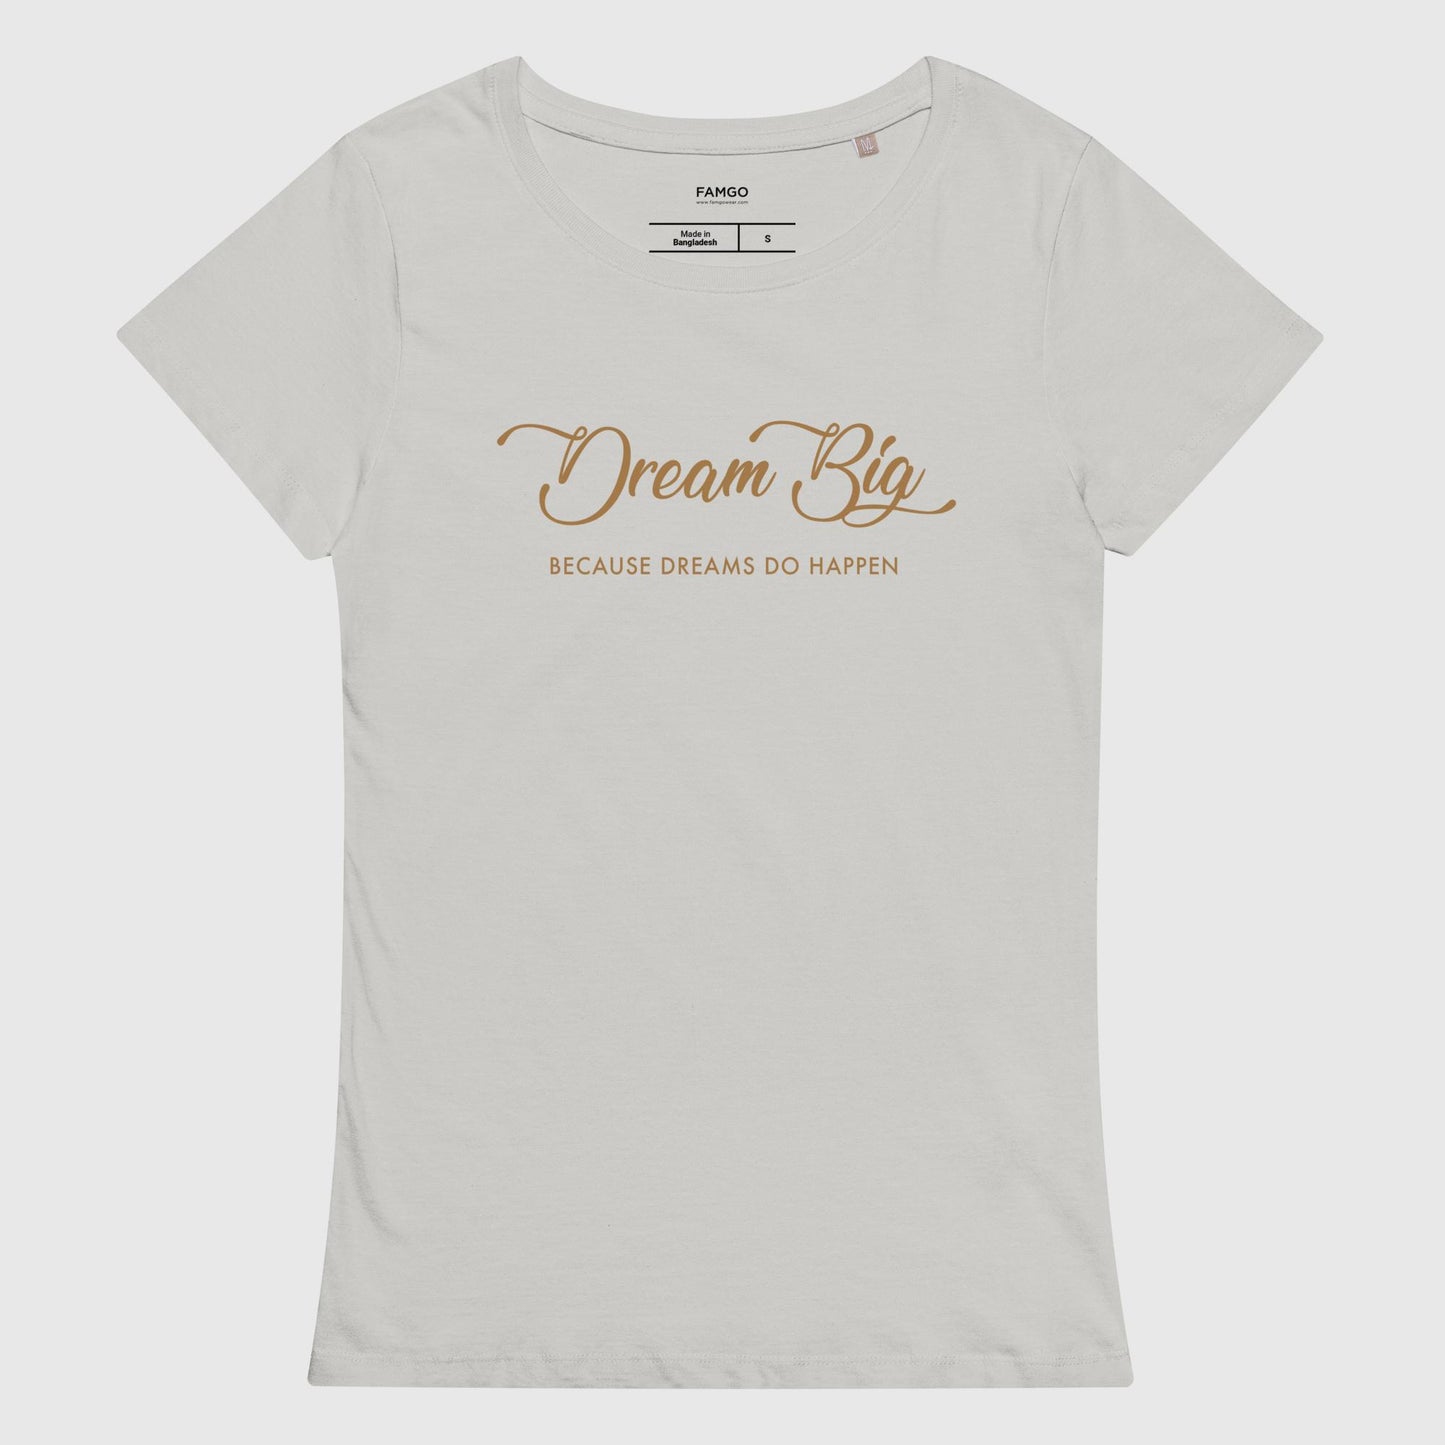 Women's gray organic cotton t-shirt that features Alex Morgan's inspirational quote, "Dream Big - Because Dreams Do Happen."